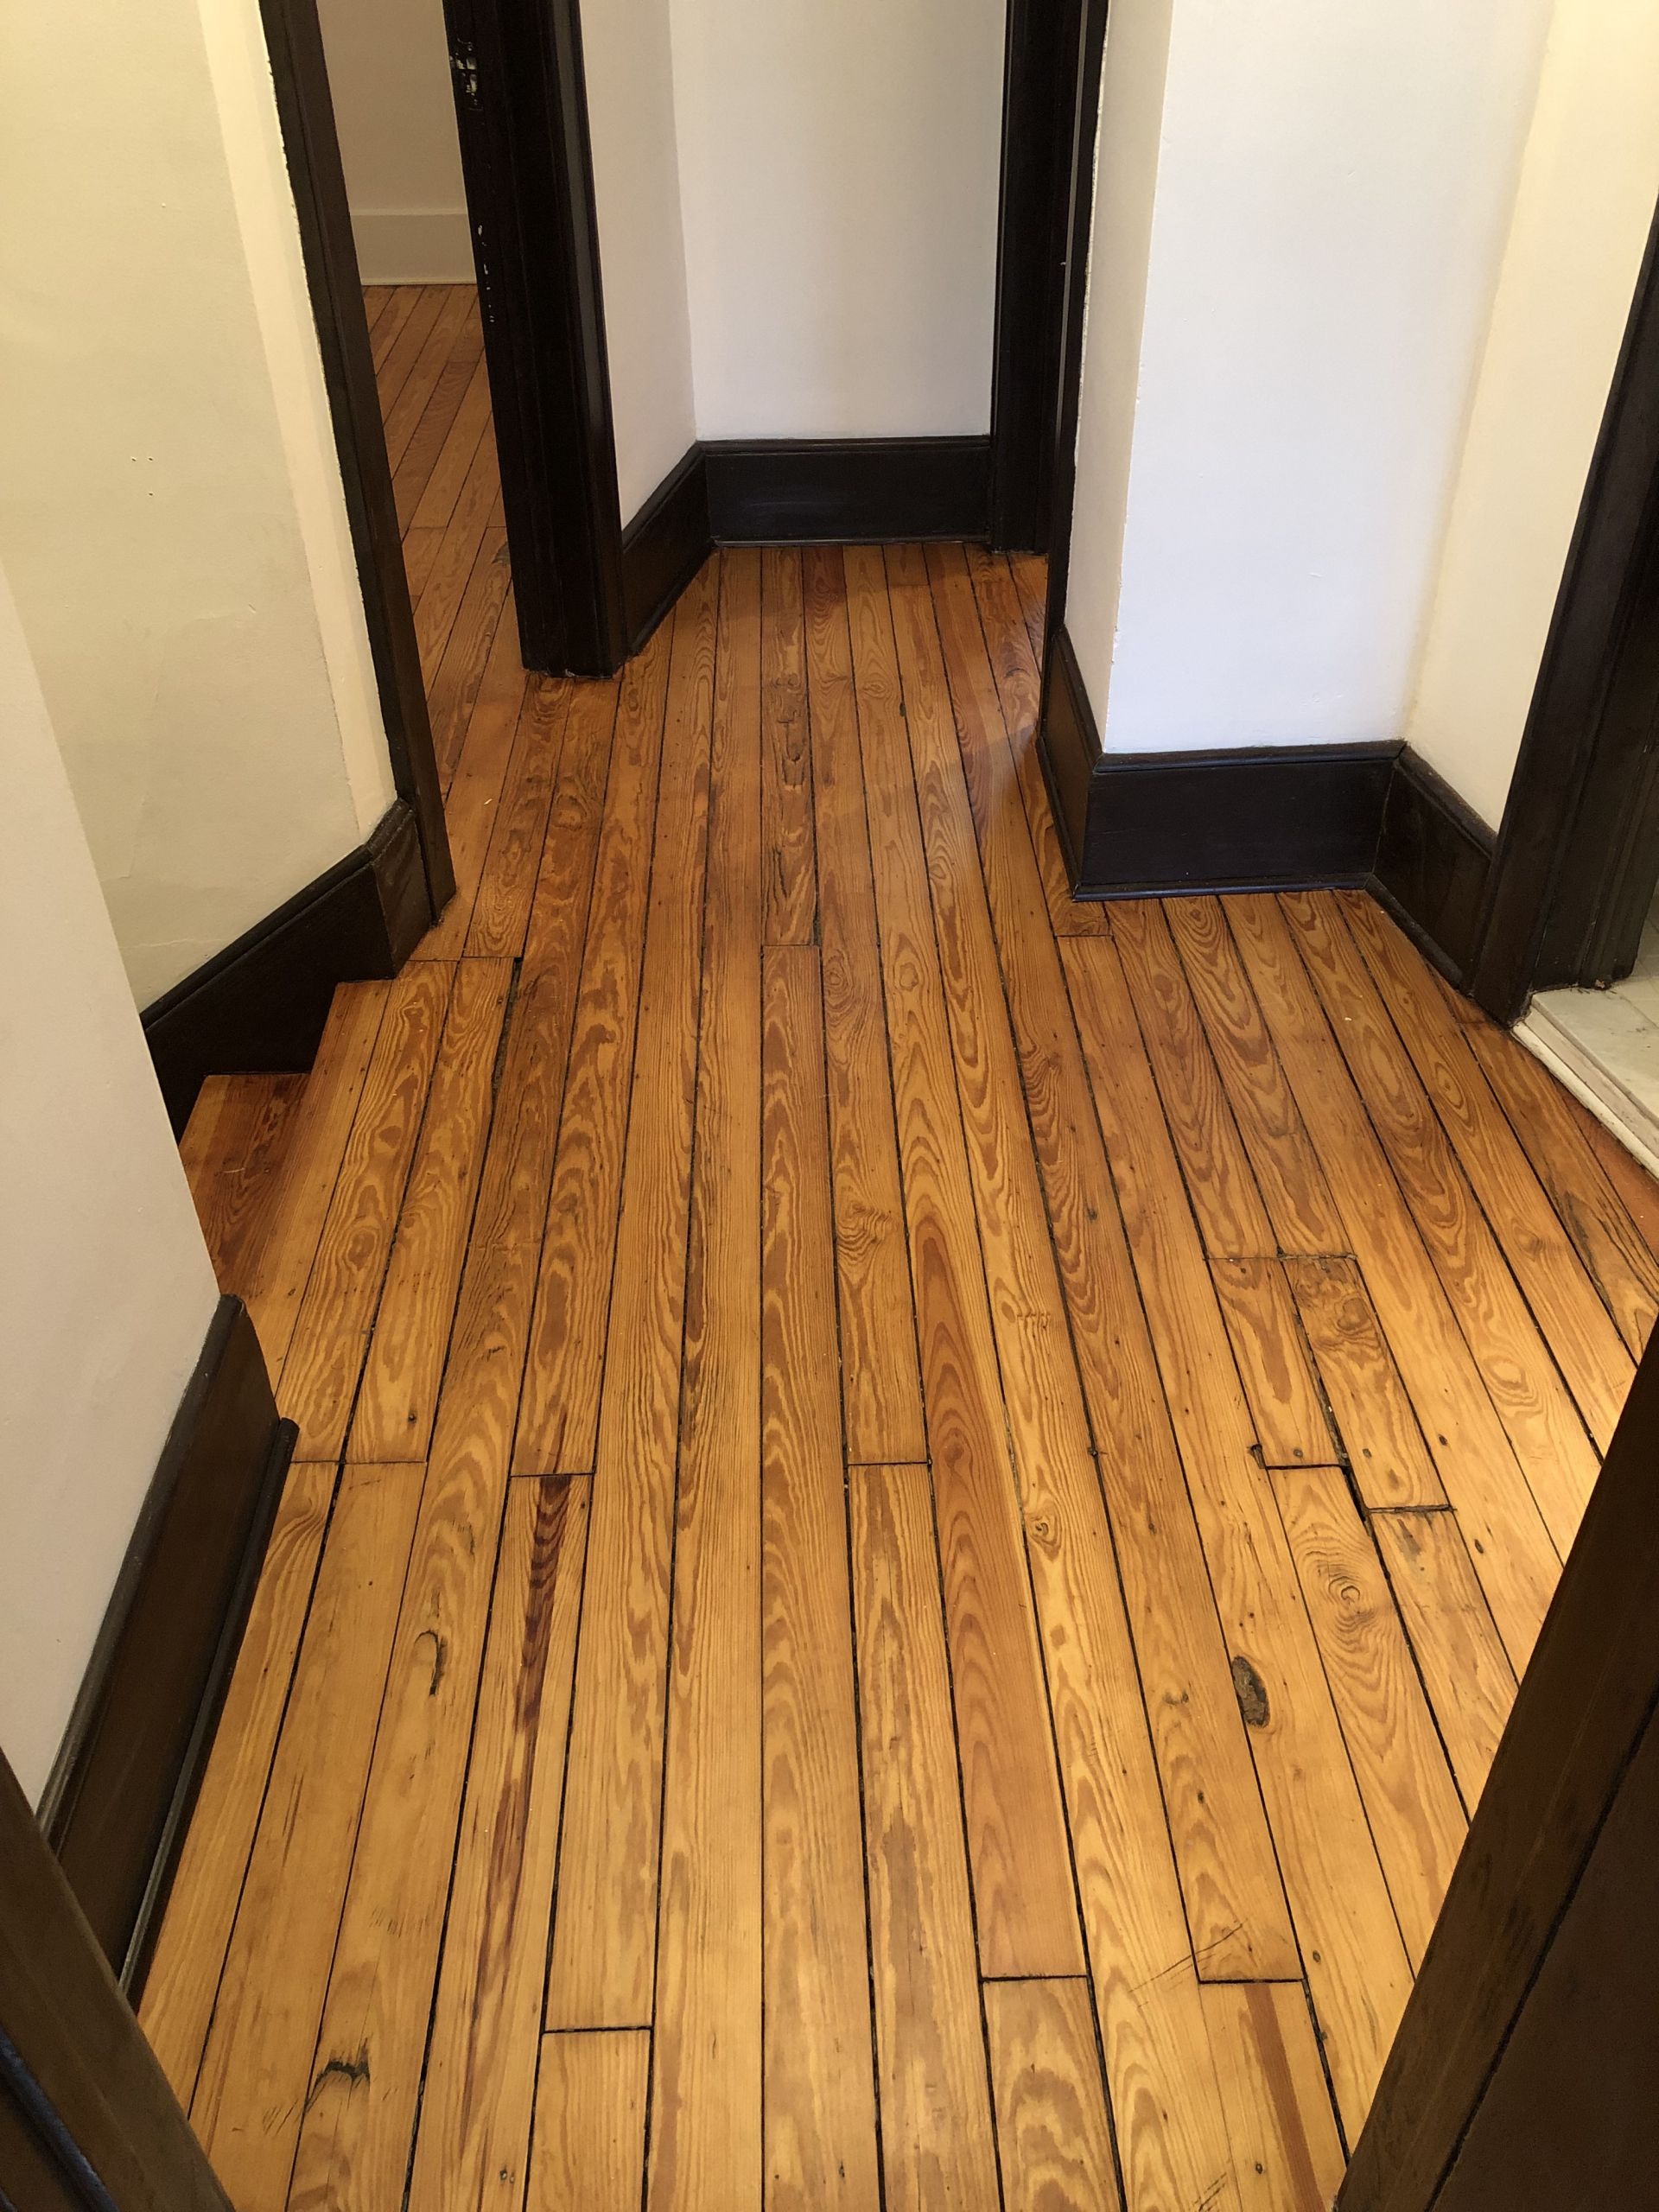 DIY Hardwood Floor Refinish
 HOW TO REFINISH HARDWOOD FLOORS Step by Step Do It